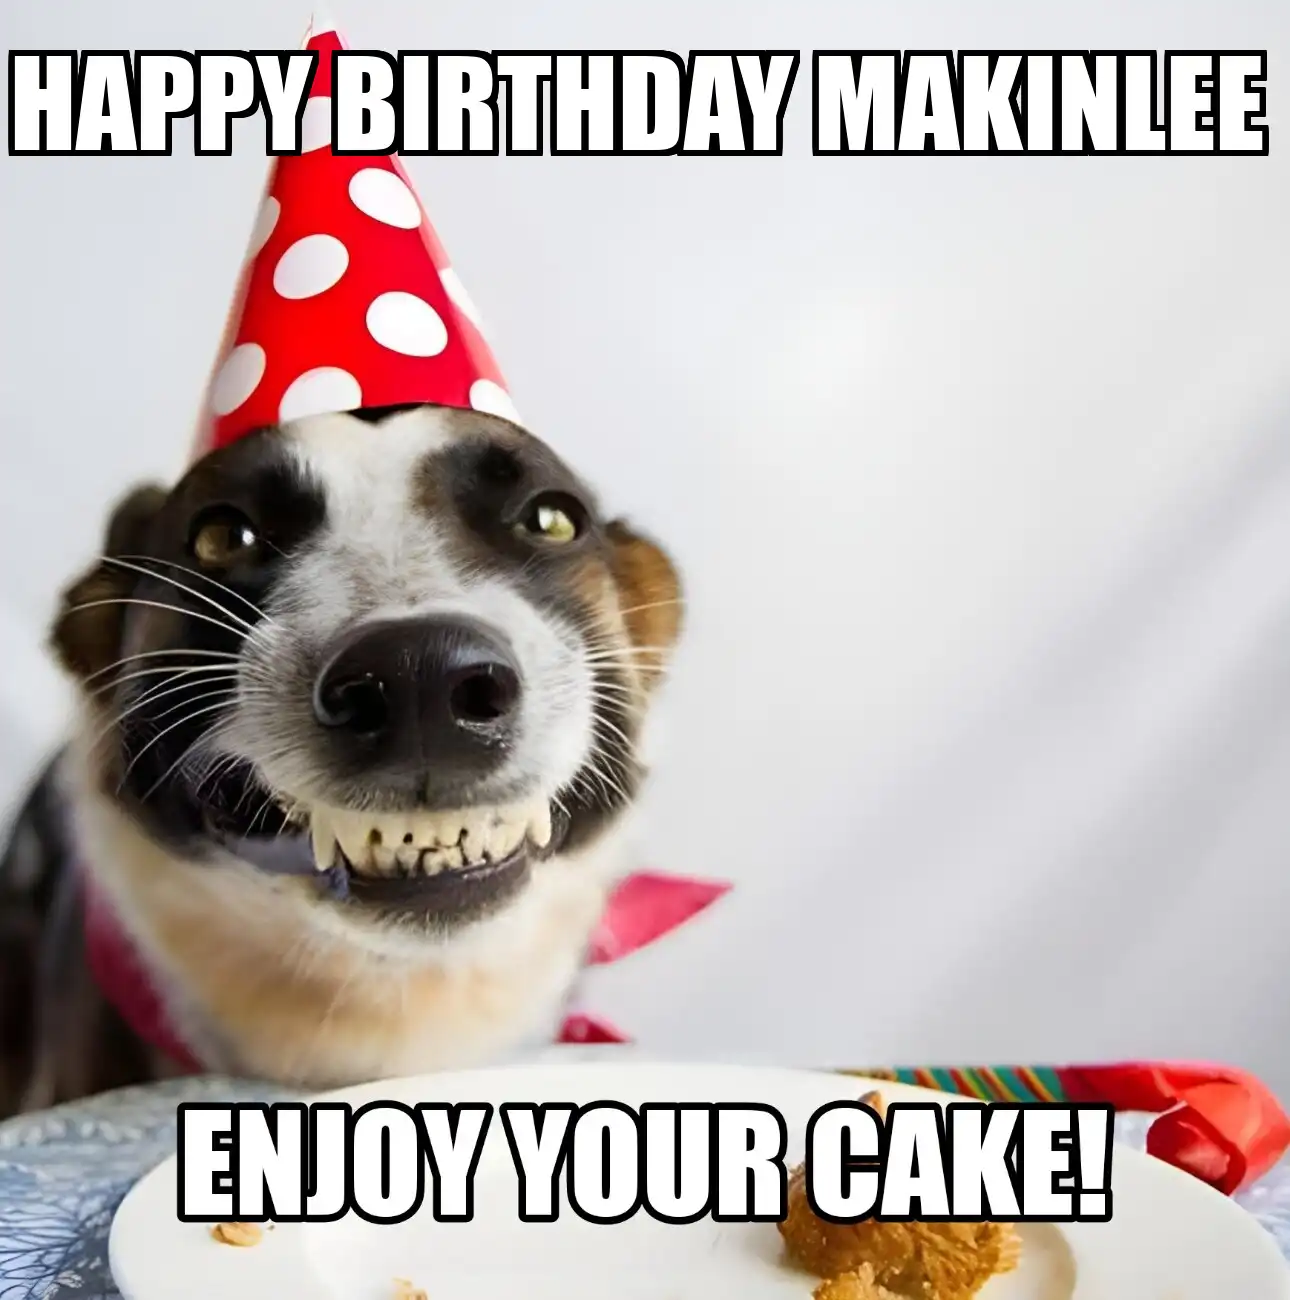 Happy Birthday Makinlee Enjoy Your Cake Dog Meme